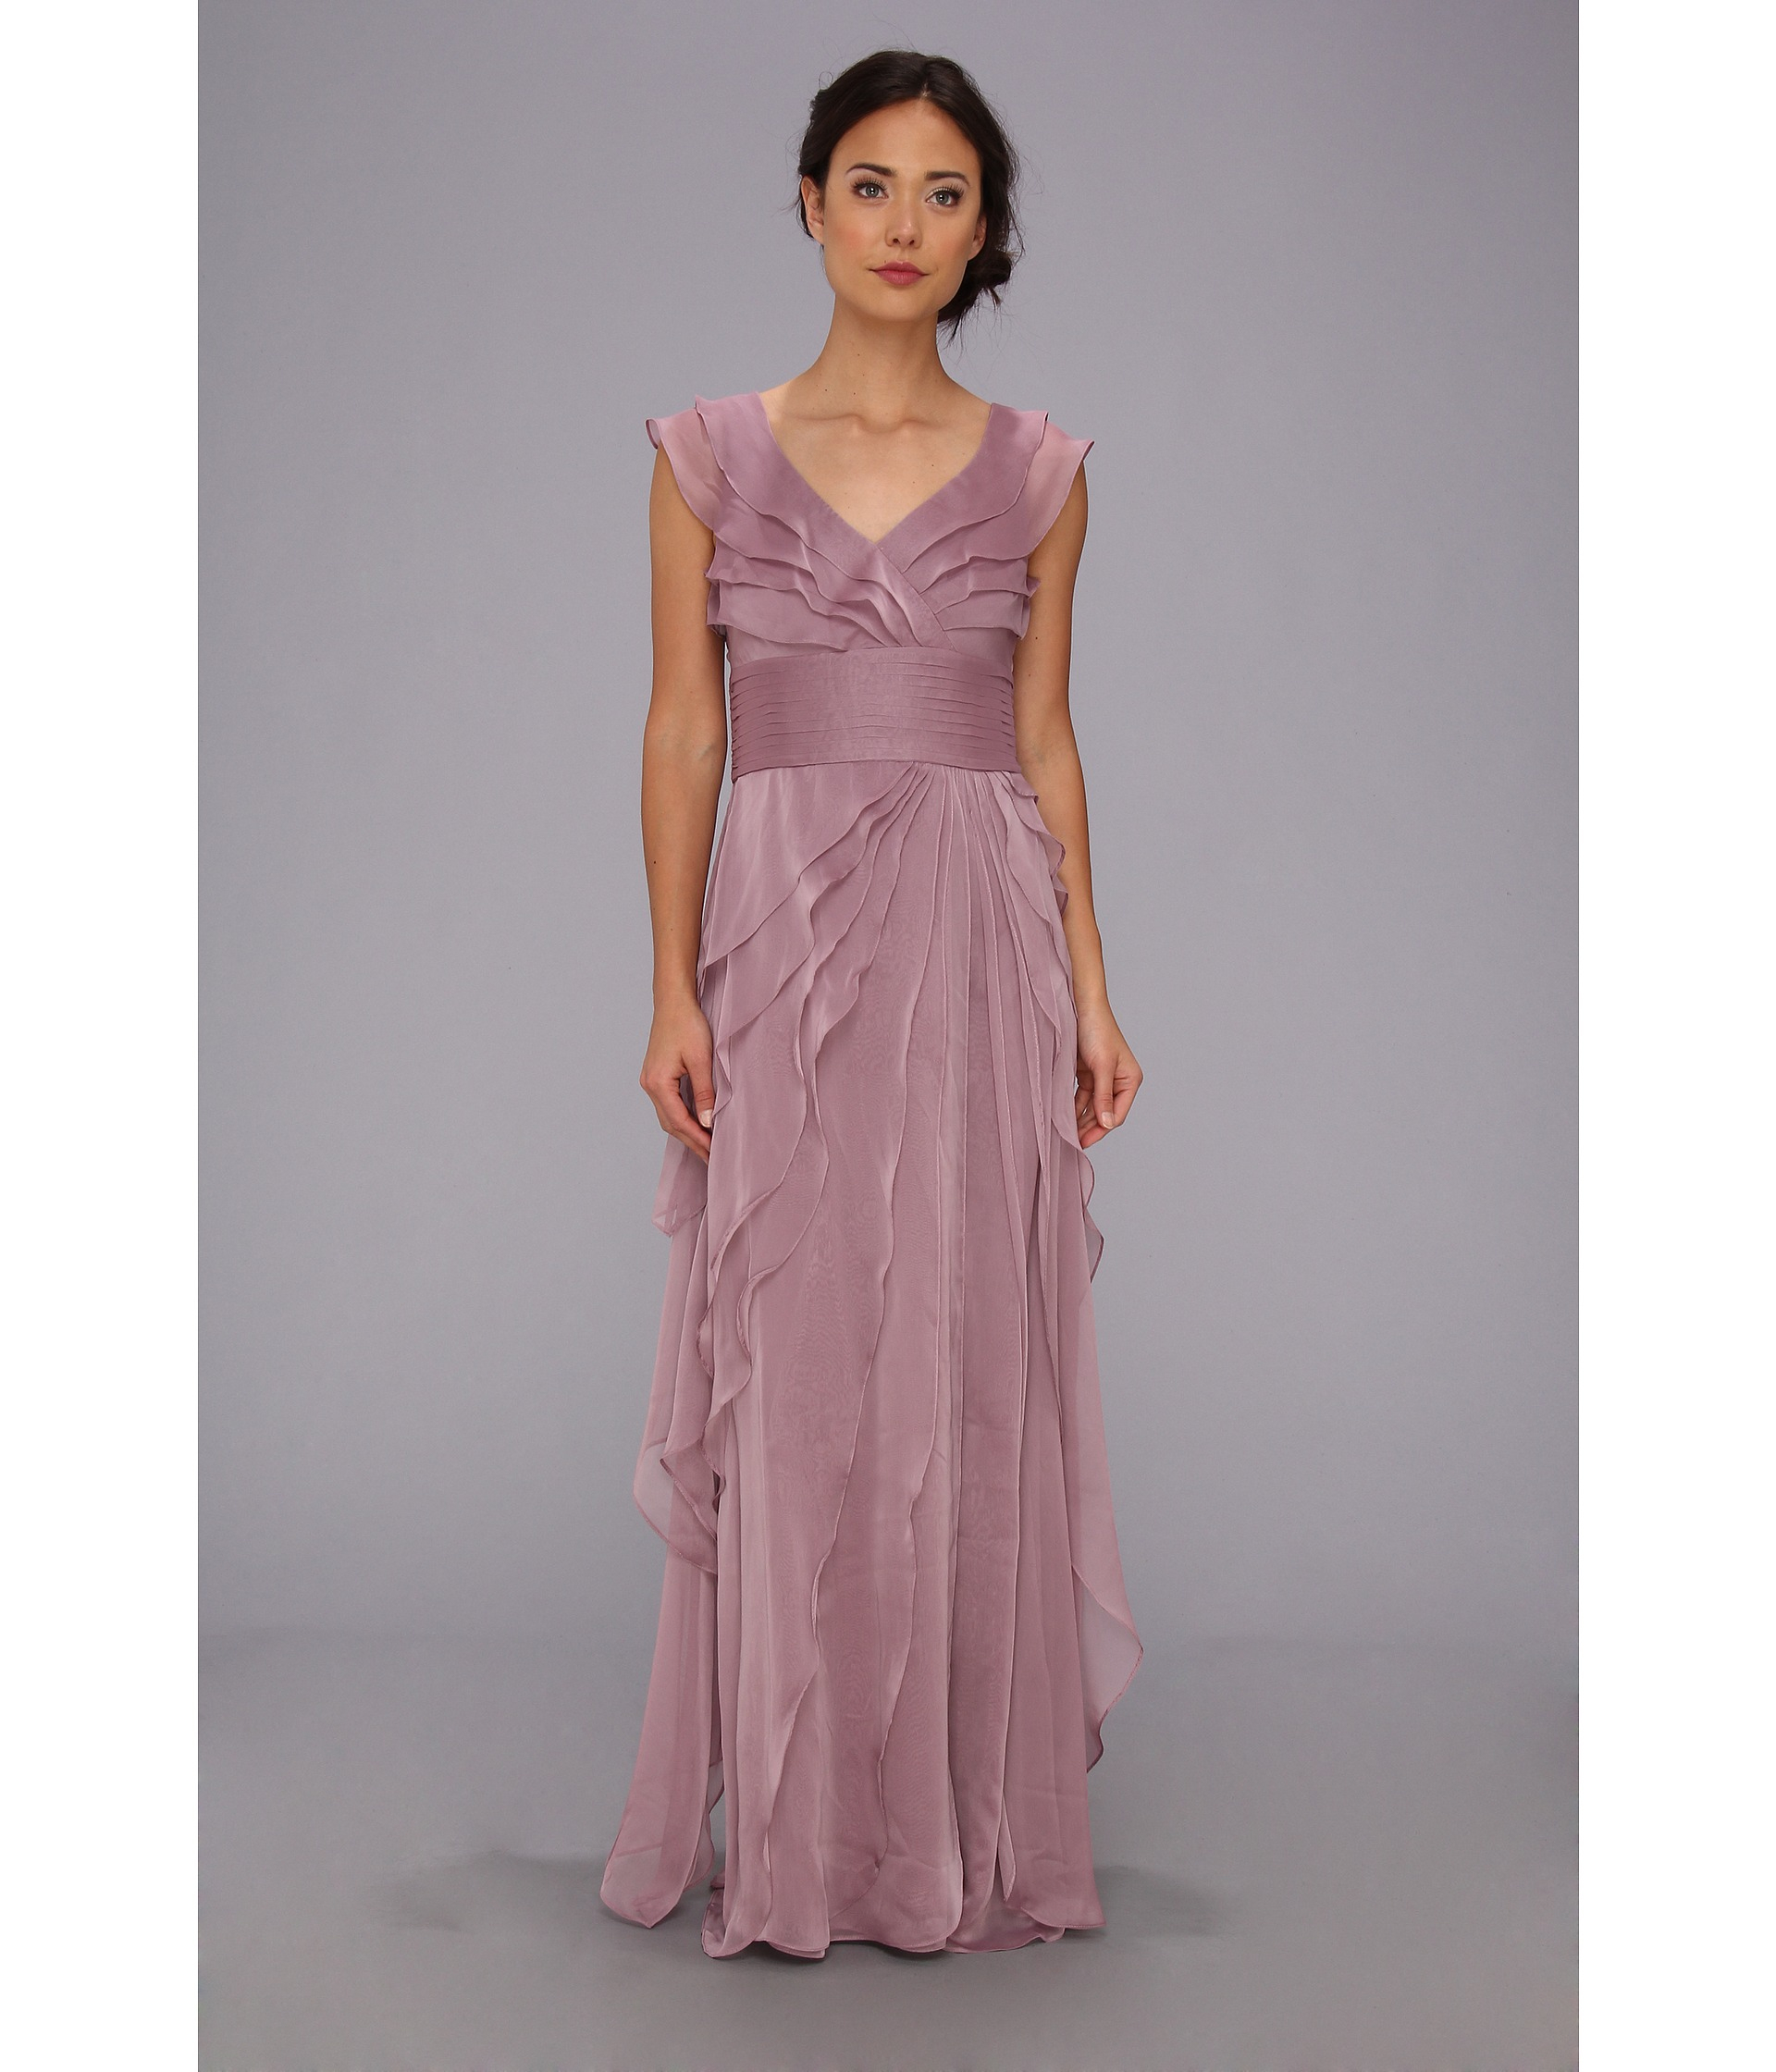 Adrianna Papell Long Irri Tiered Petal Dress in Mauve (Purple) - Lyst